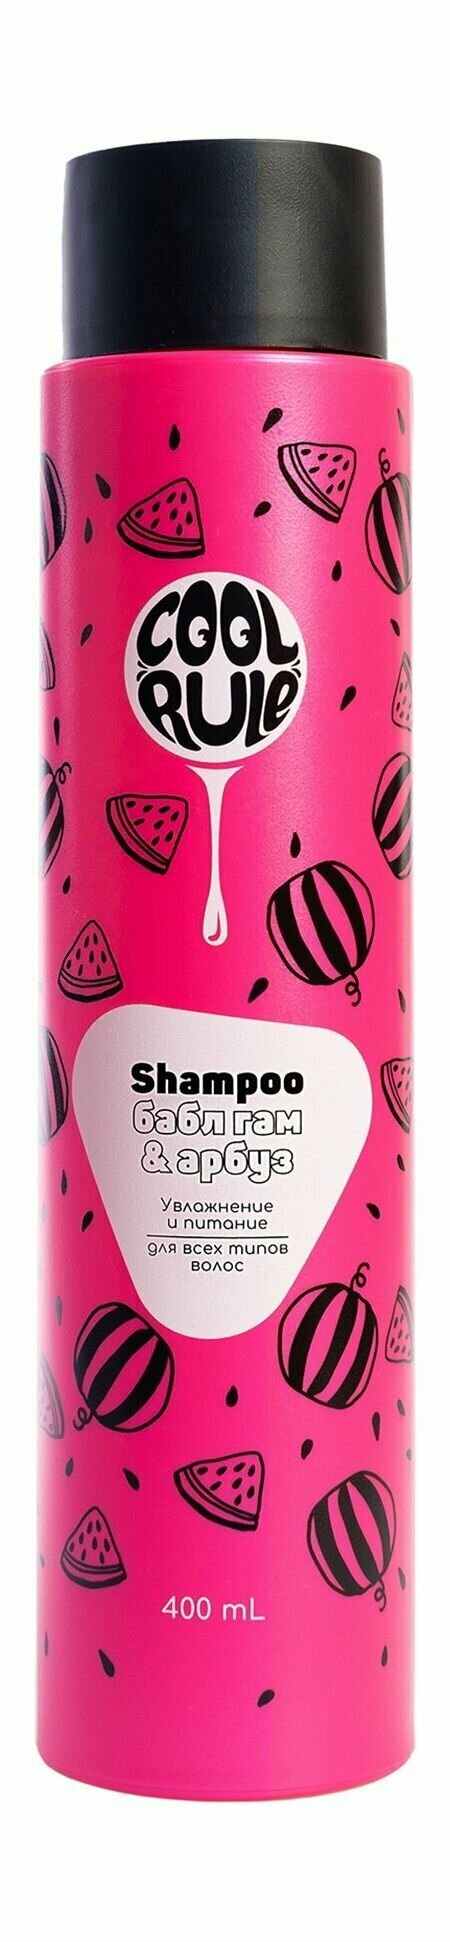 Увлажняющий шампунь для волос с ароматом бабл гам и арбуза Cool Rule Shampoo Moisturizing & Nourishing Bubble Gum & Watermelon